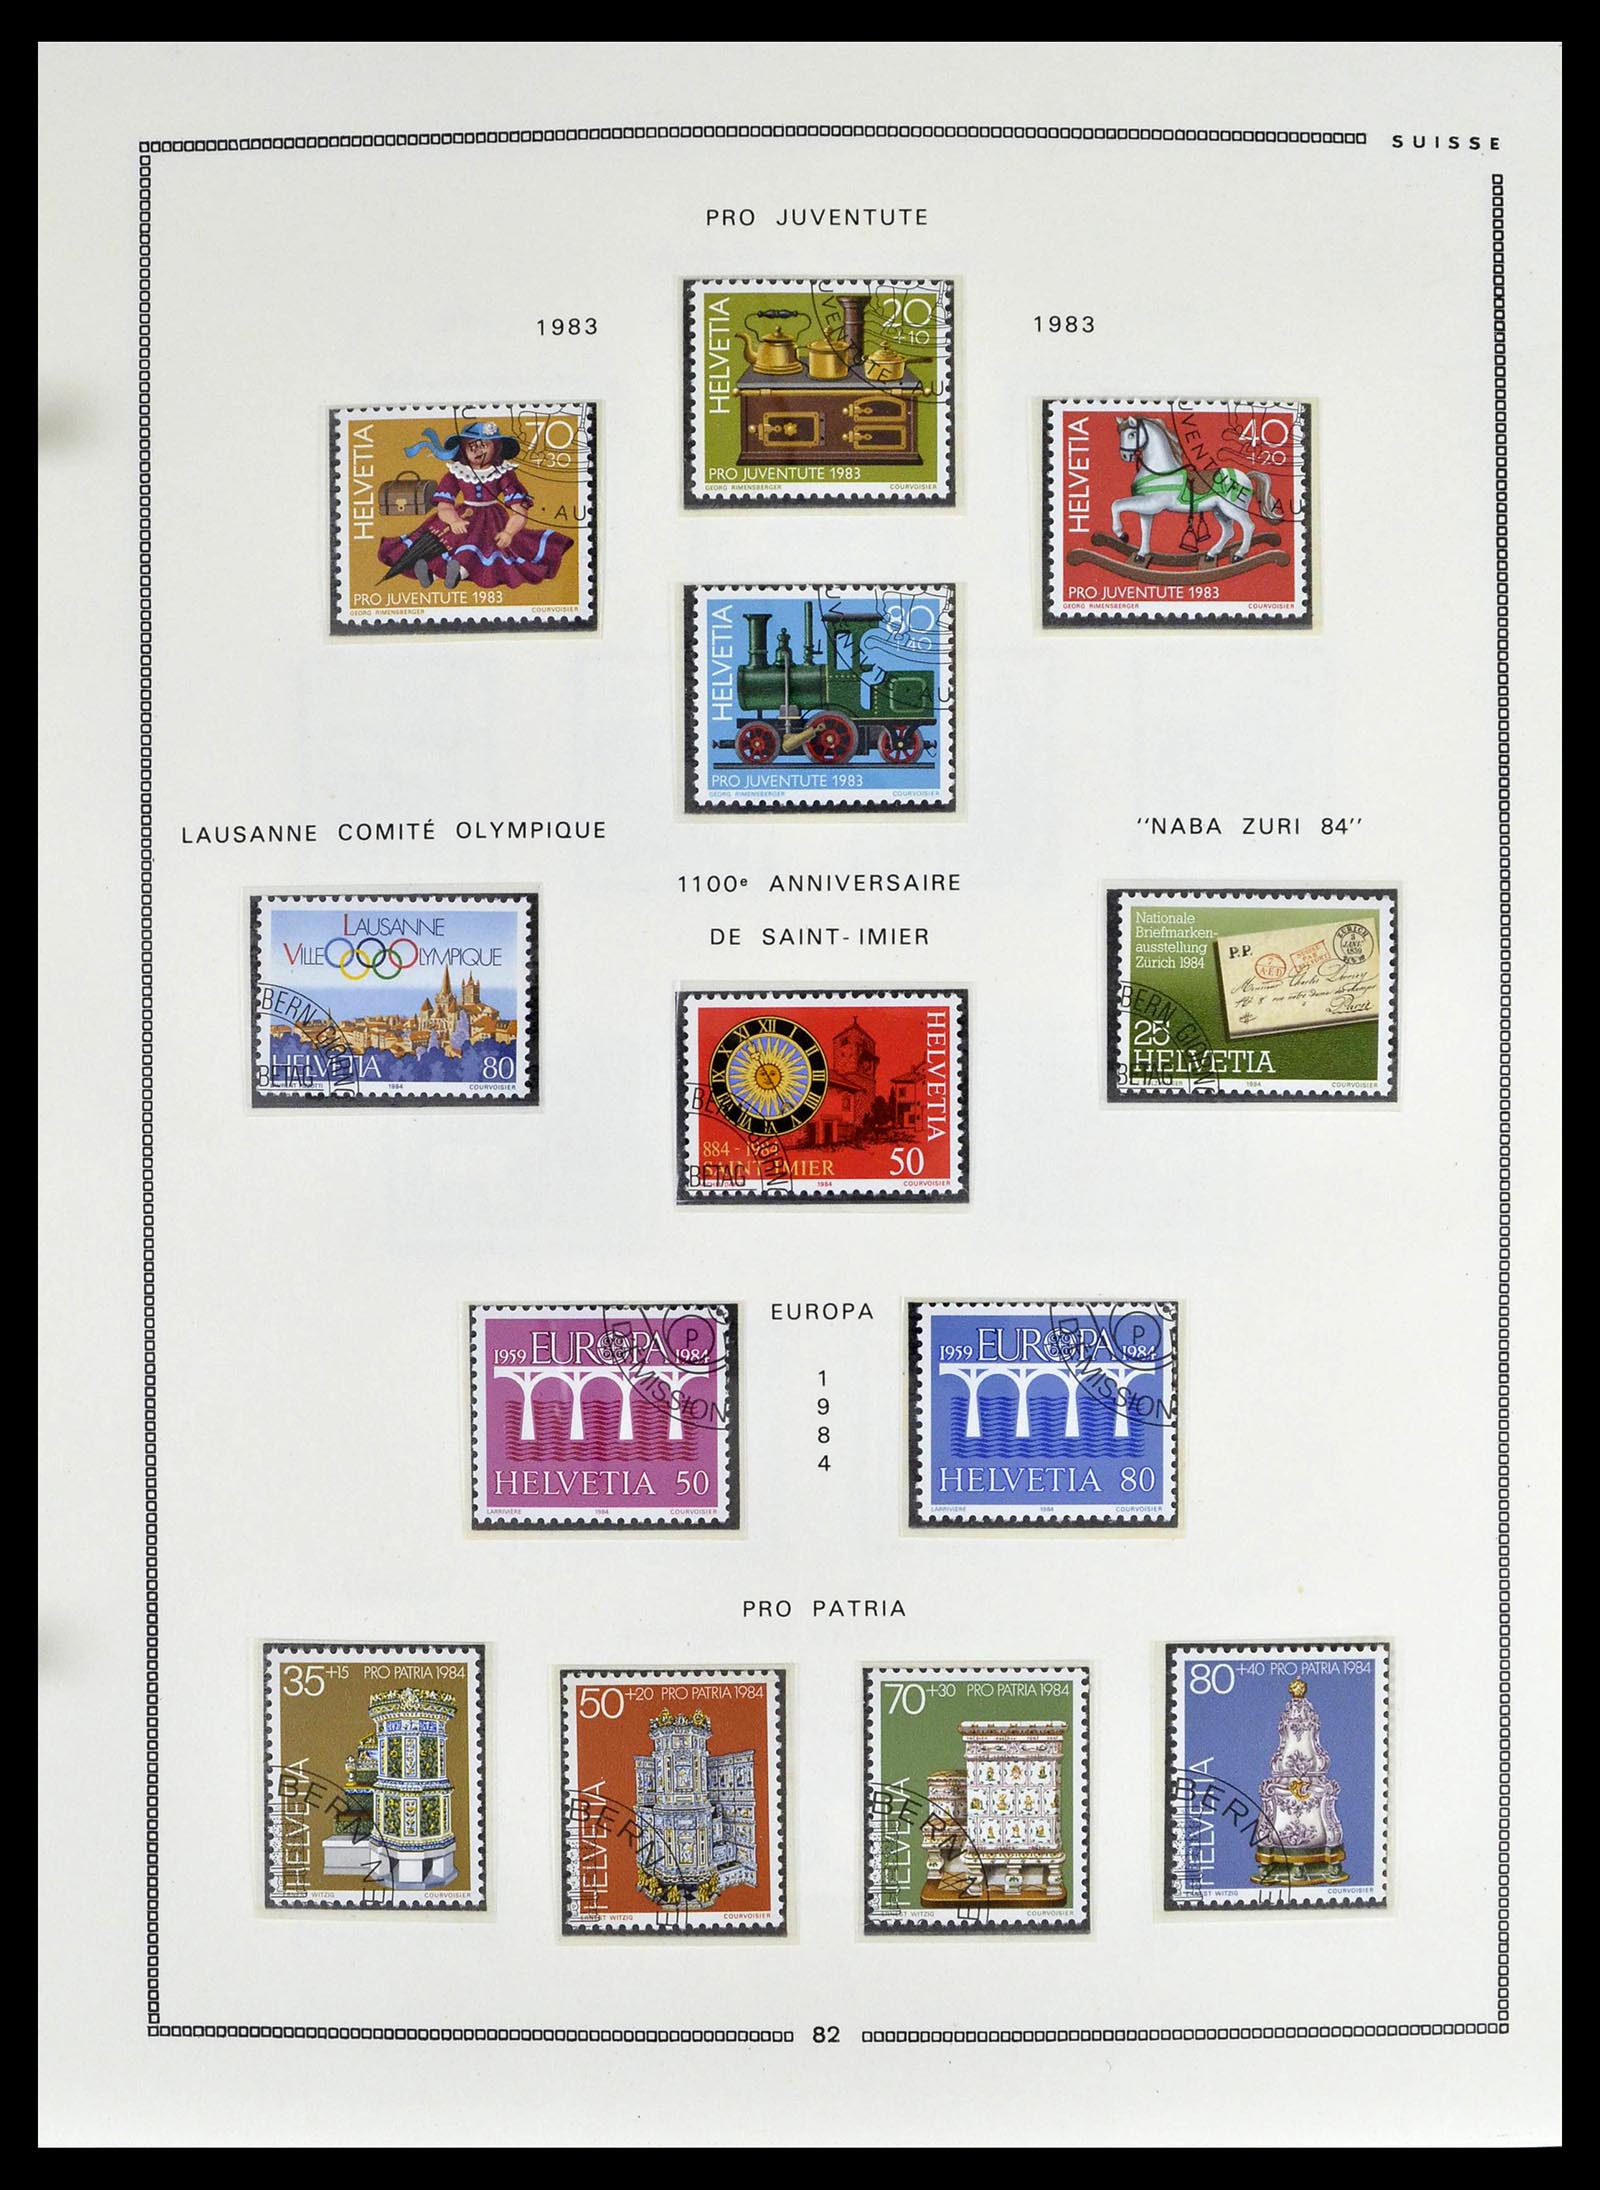 39094 0080 - Stamp collection 39094 Switzerland 1850-2005.